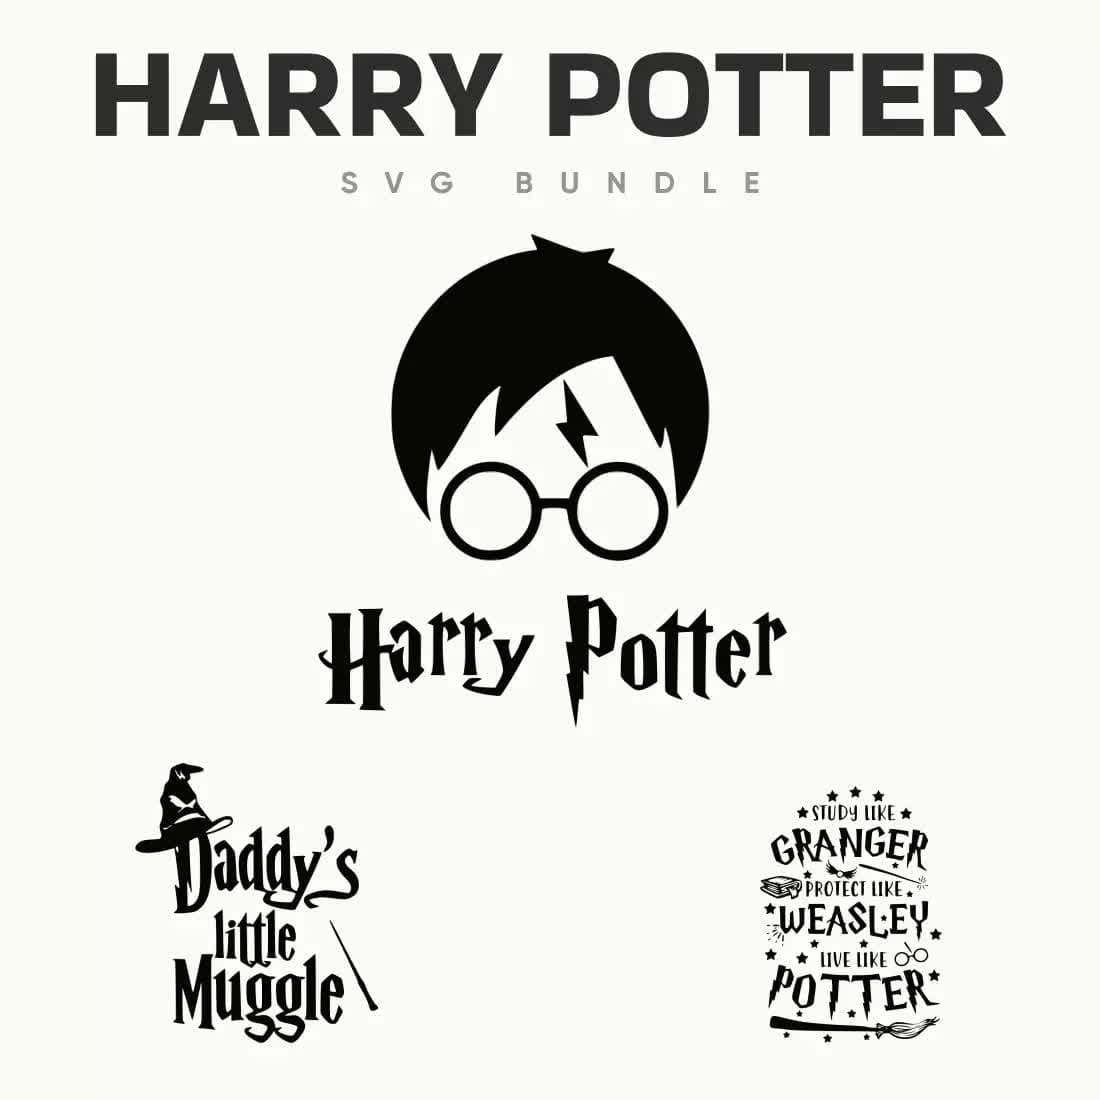 Harry Potter SVG Bundle Preview 1.